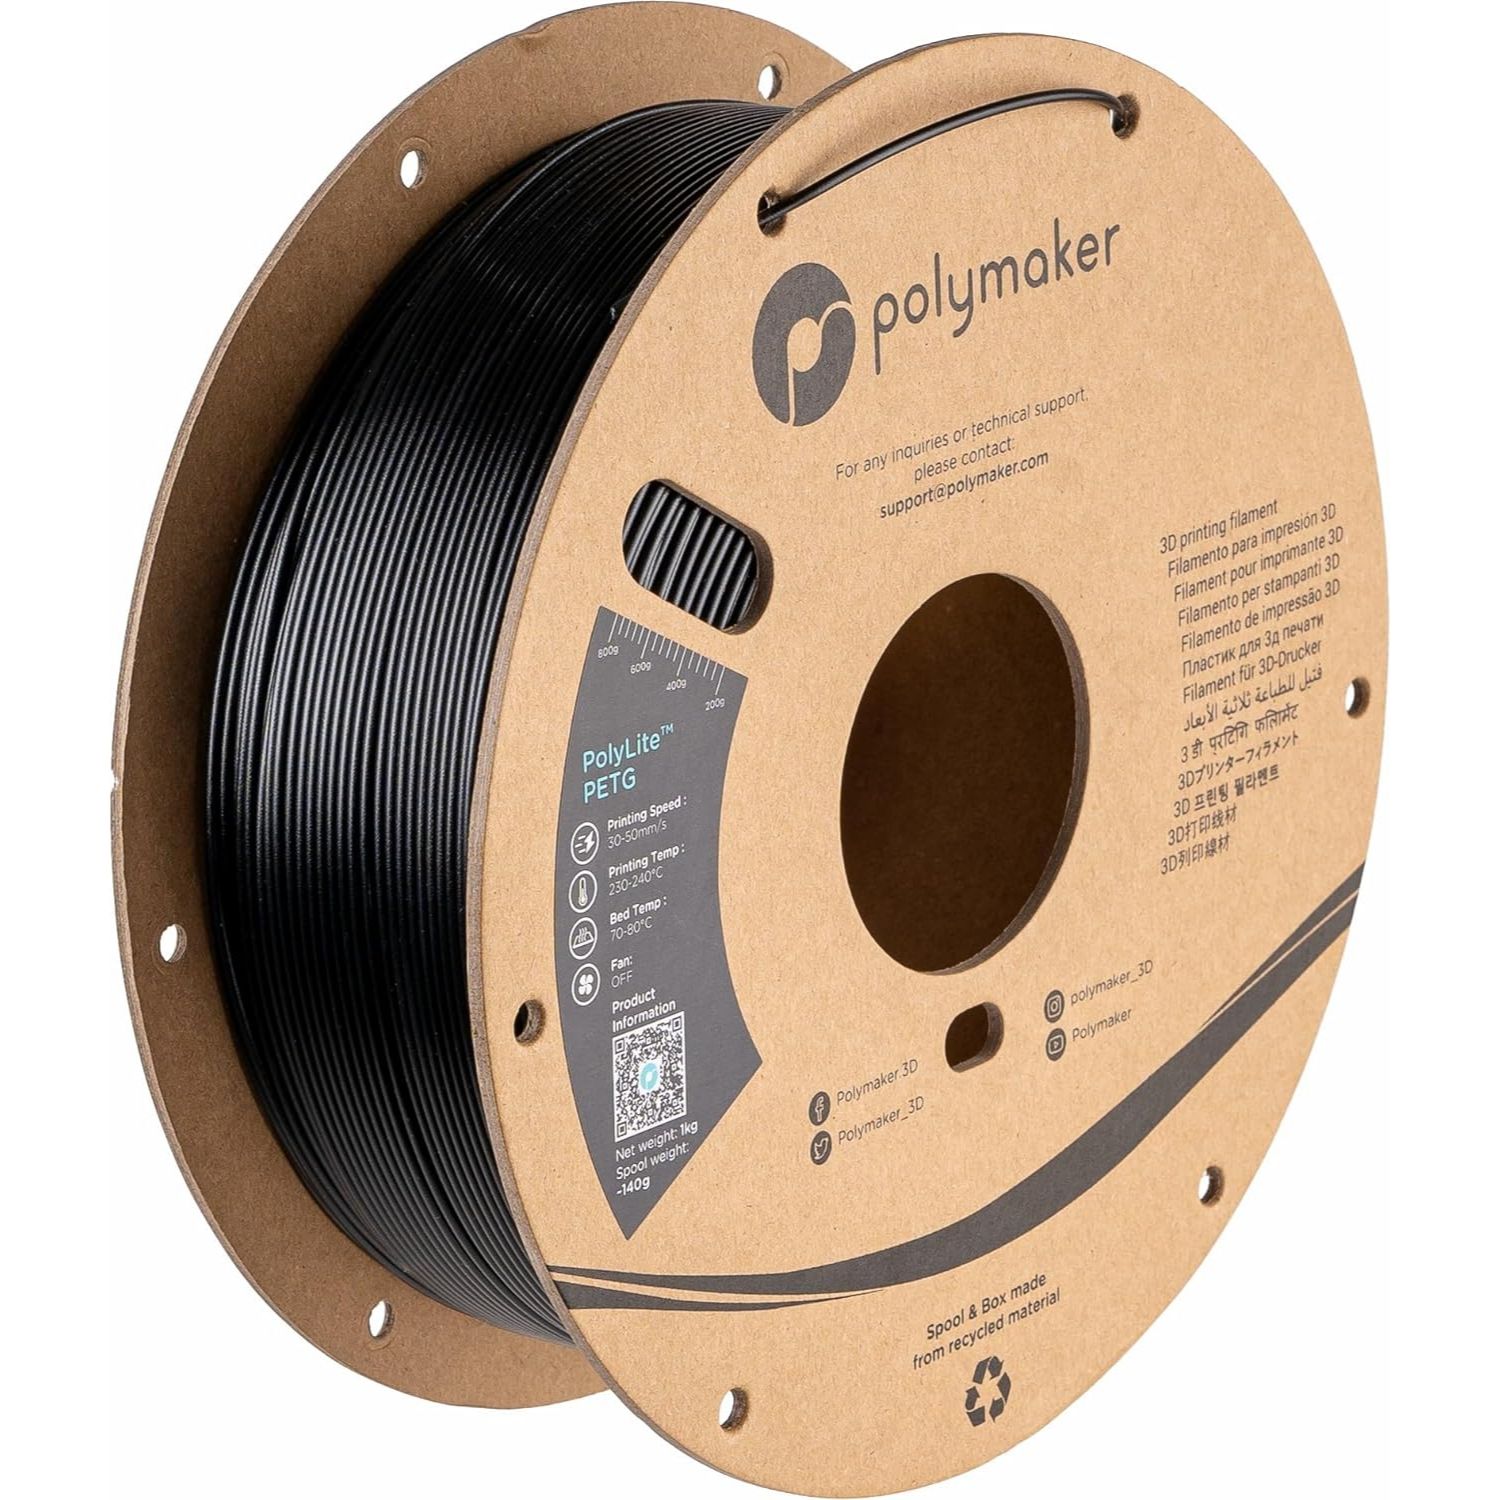 PolyLite PETG 1.75mm 1kg - EC 3D Printing Supplies